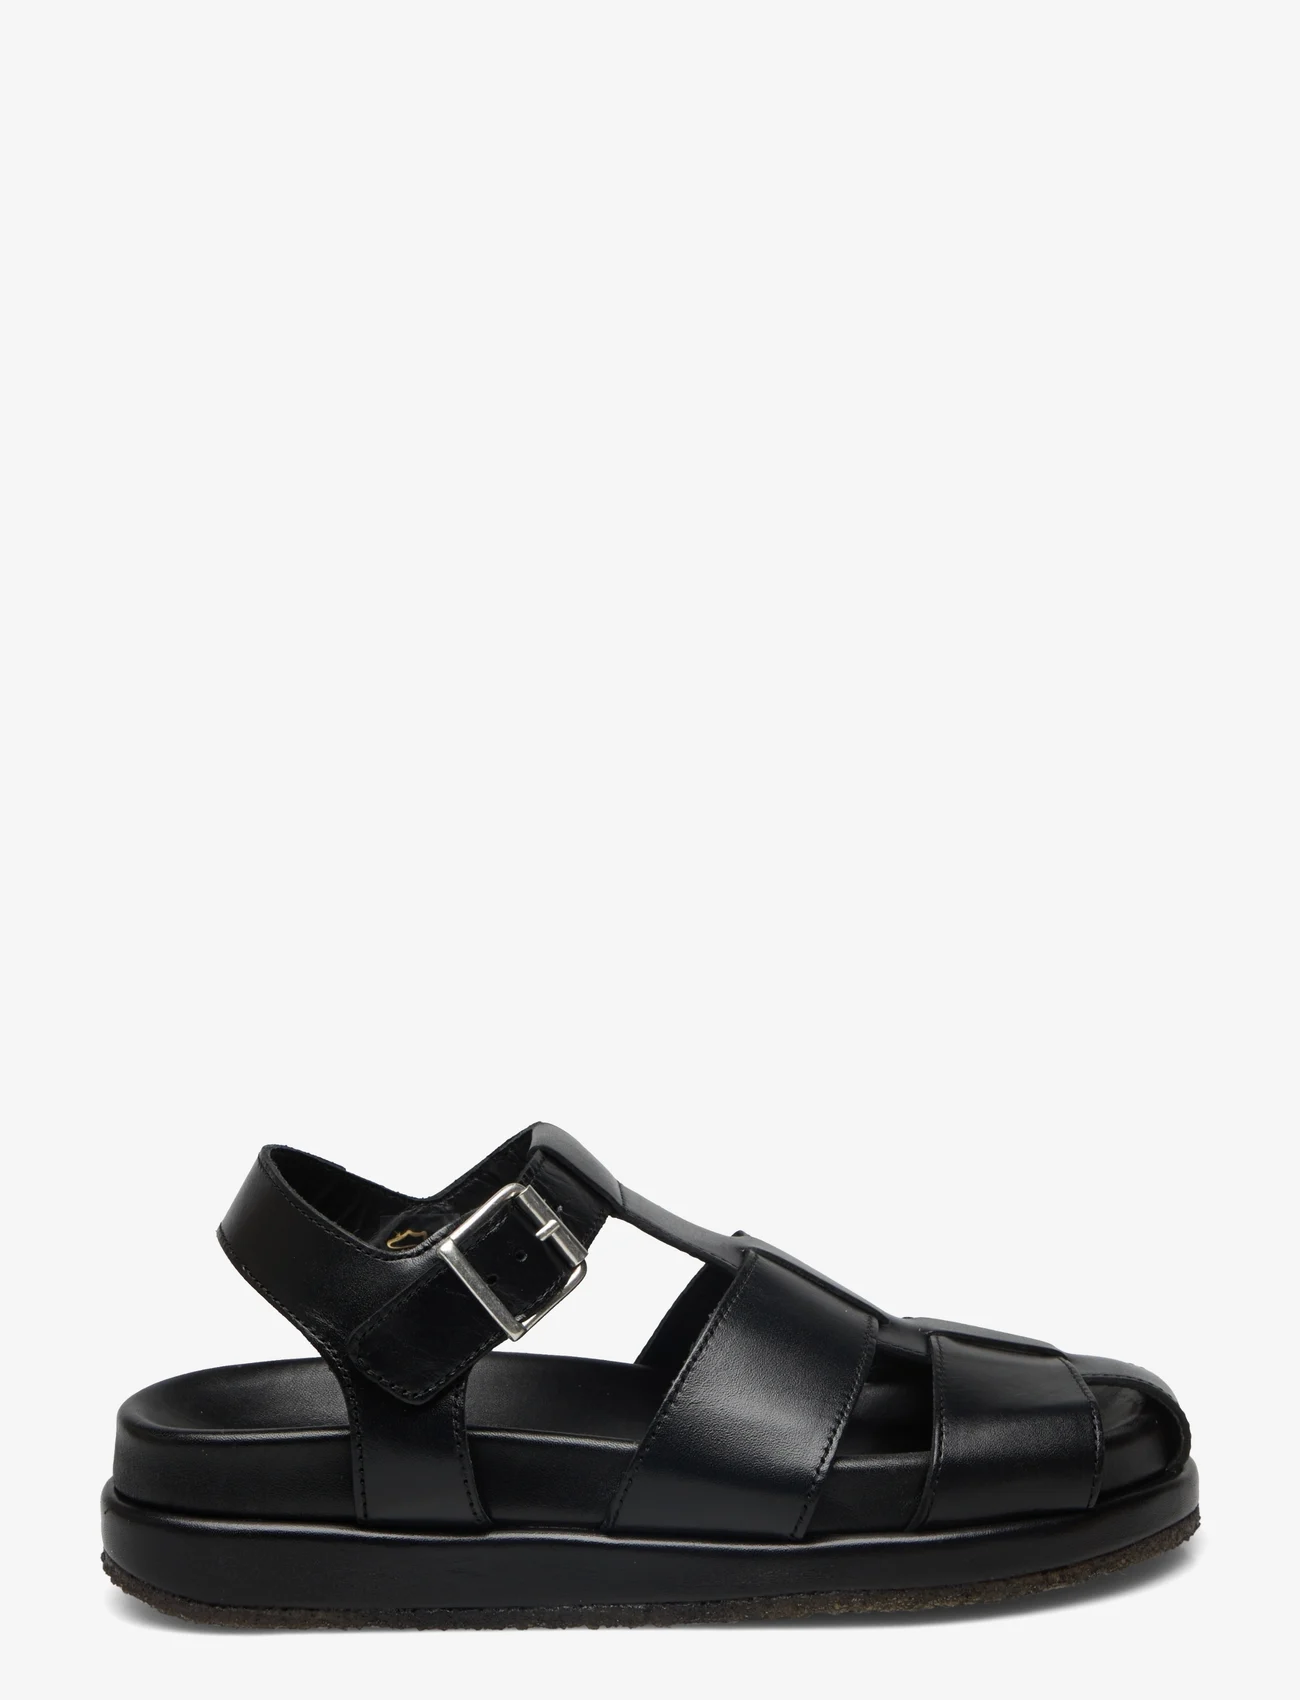 ANGULUS - Sandals - flat - open toe - op - platta sandaler - 1604/1785 black - 1